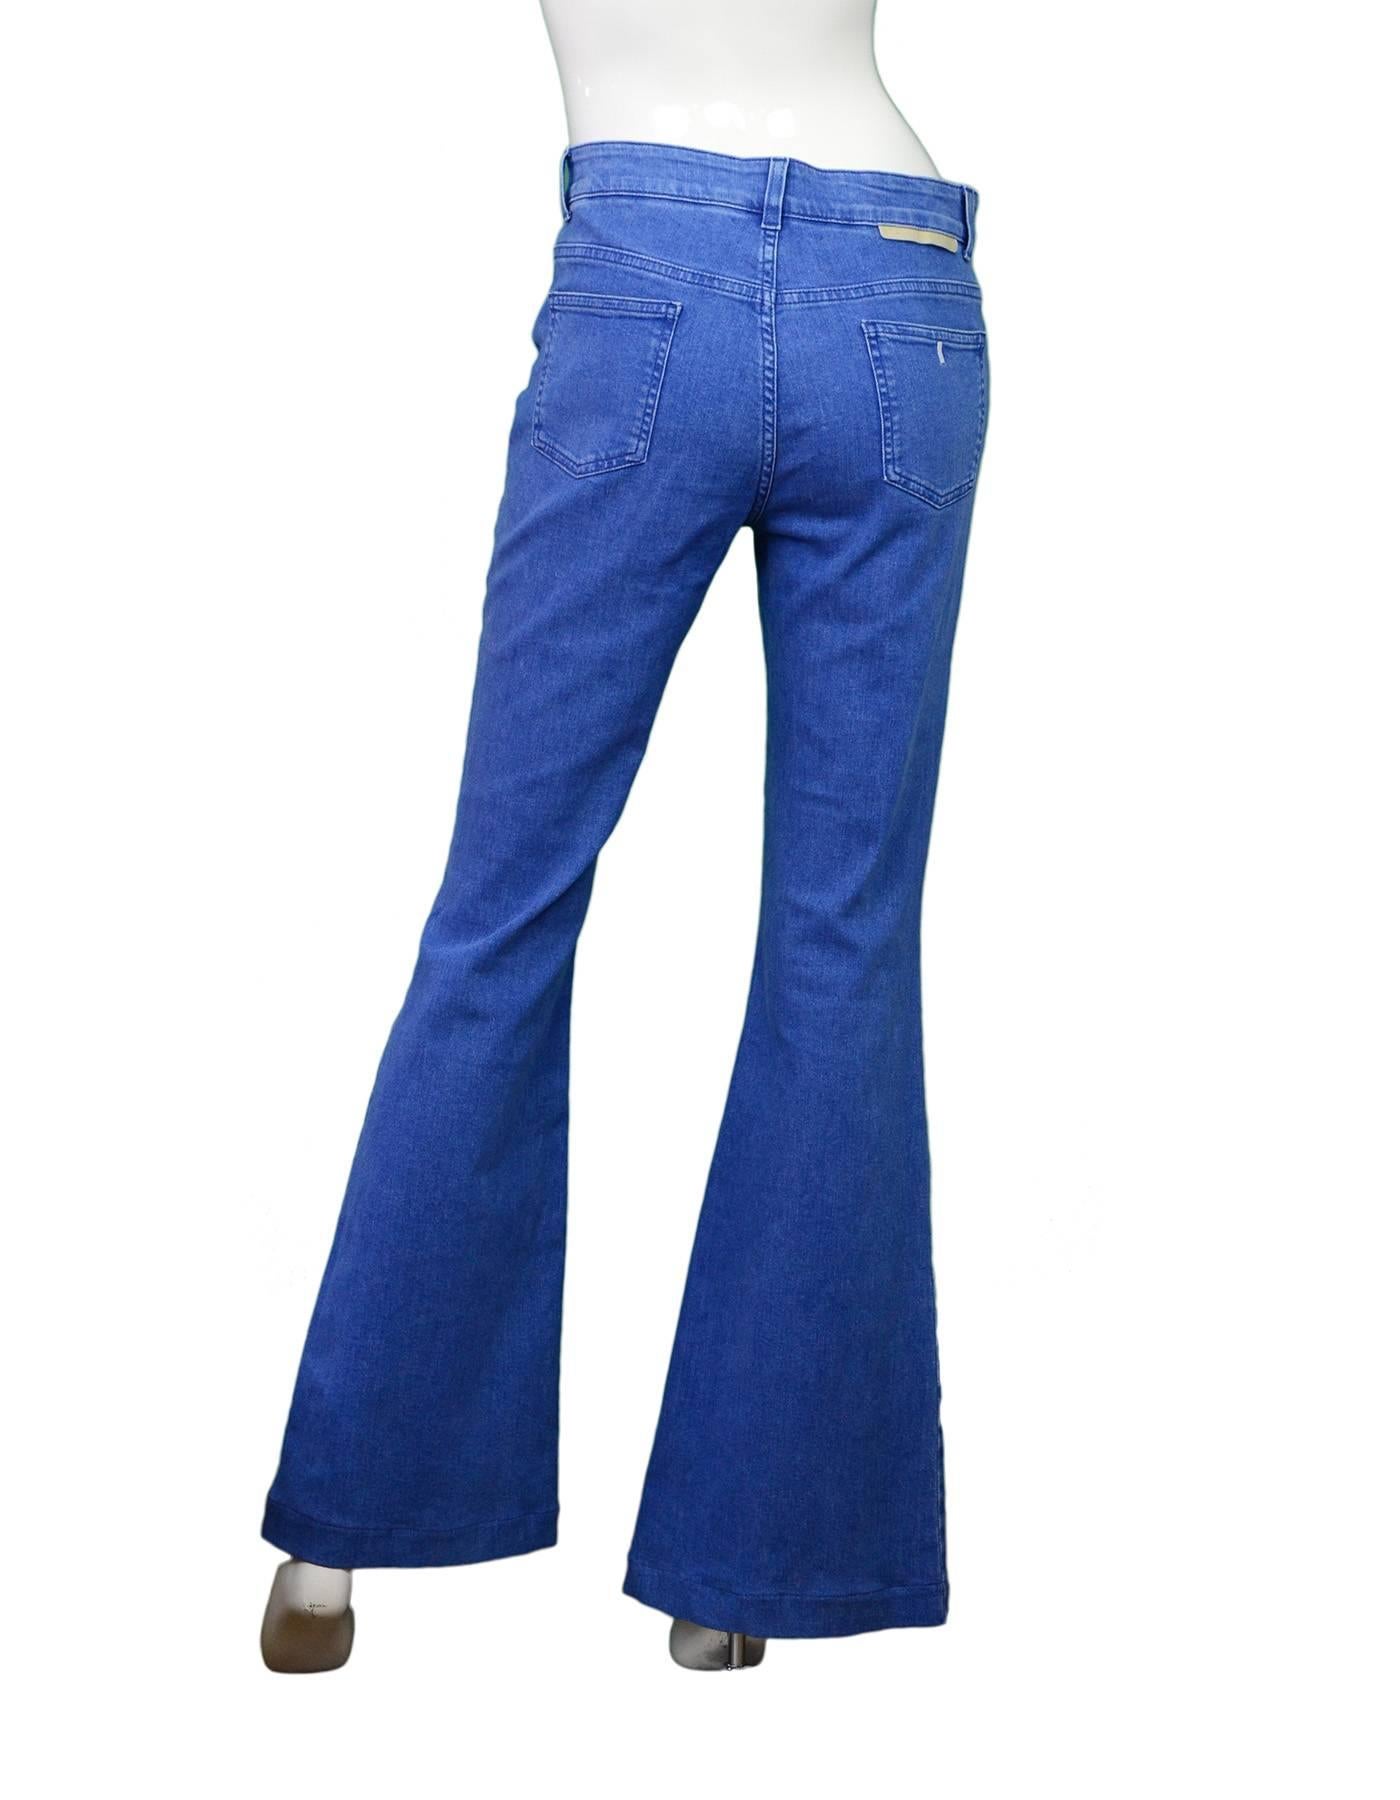 stella mccartney flare jeans